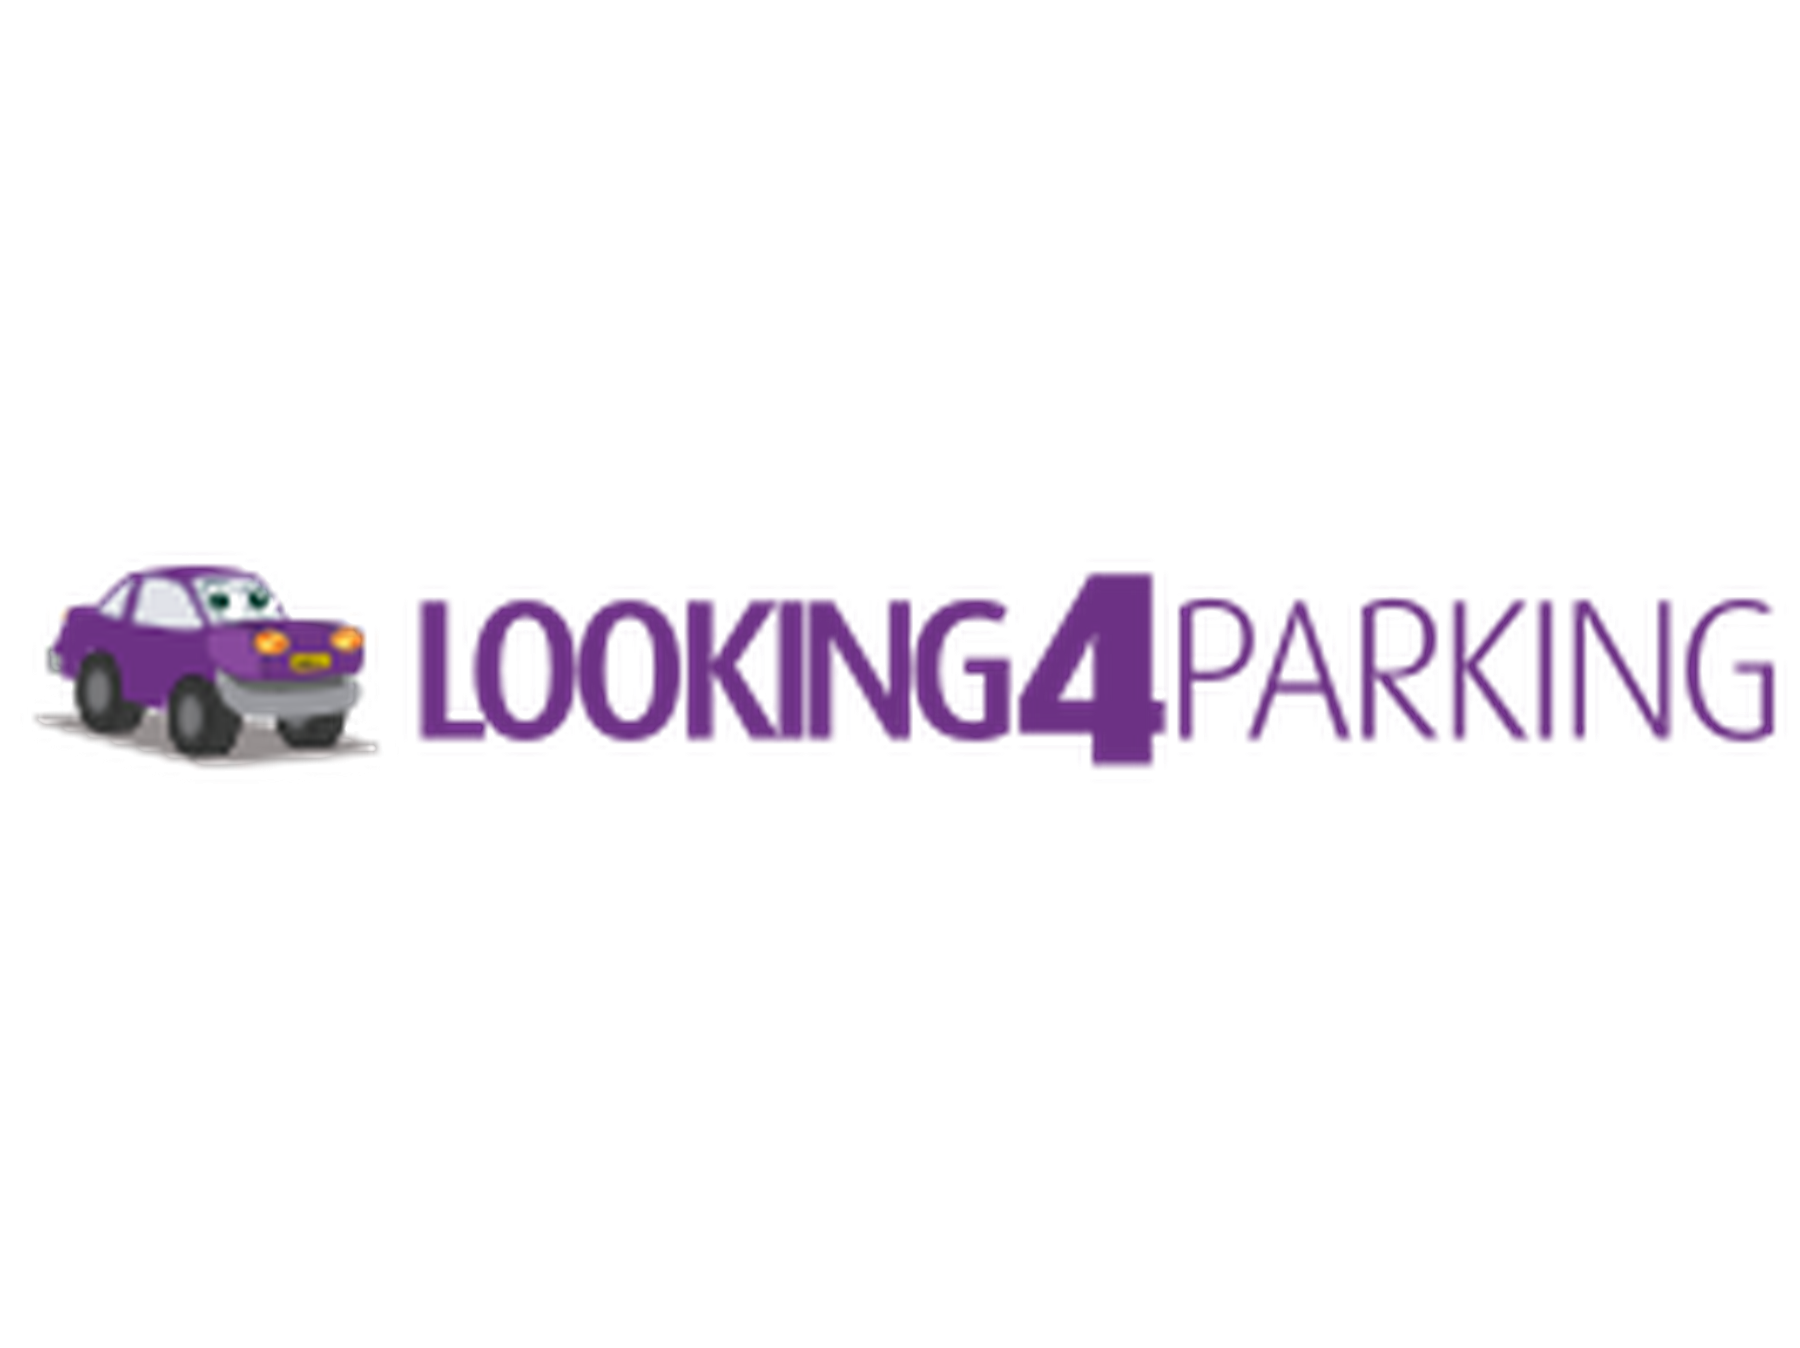 Looking4 - Airport Parking discount code